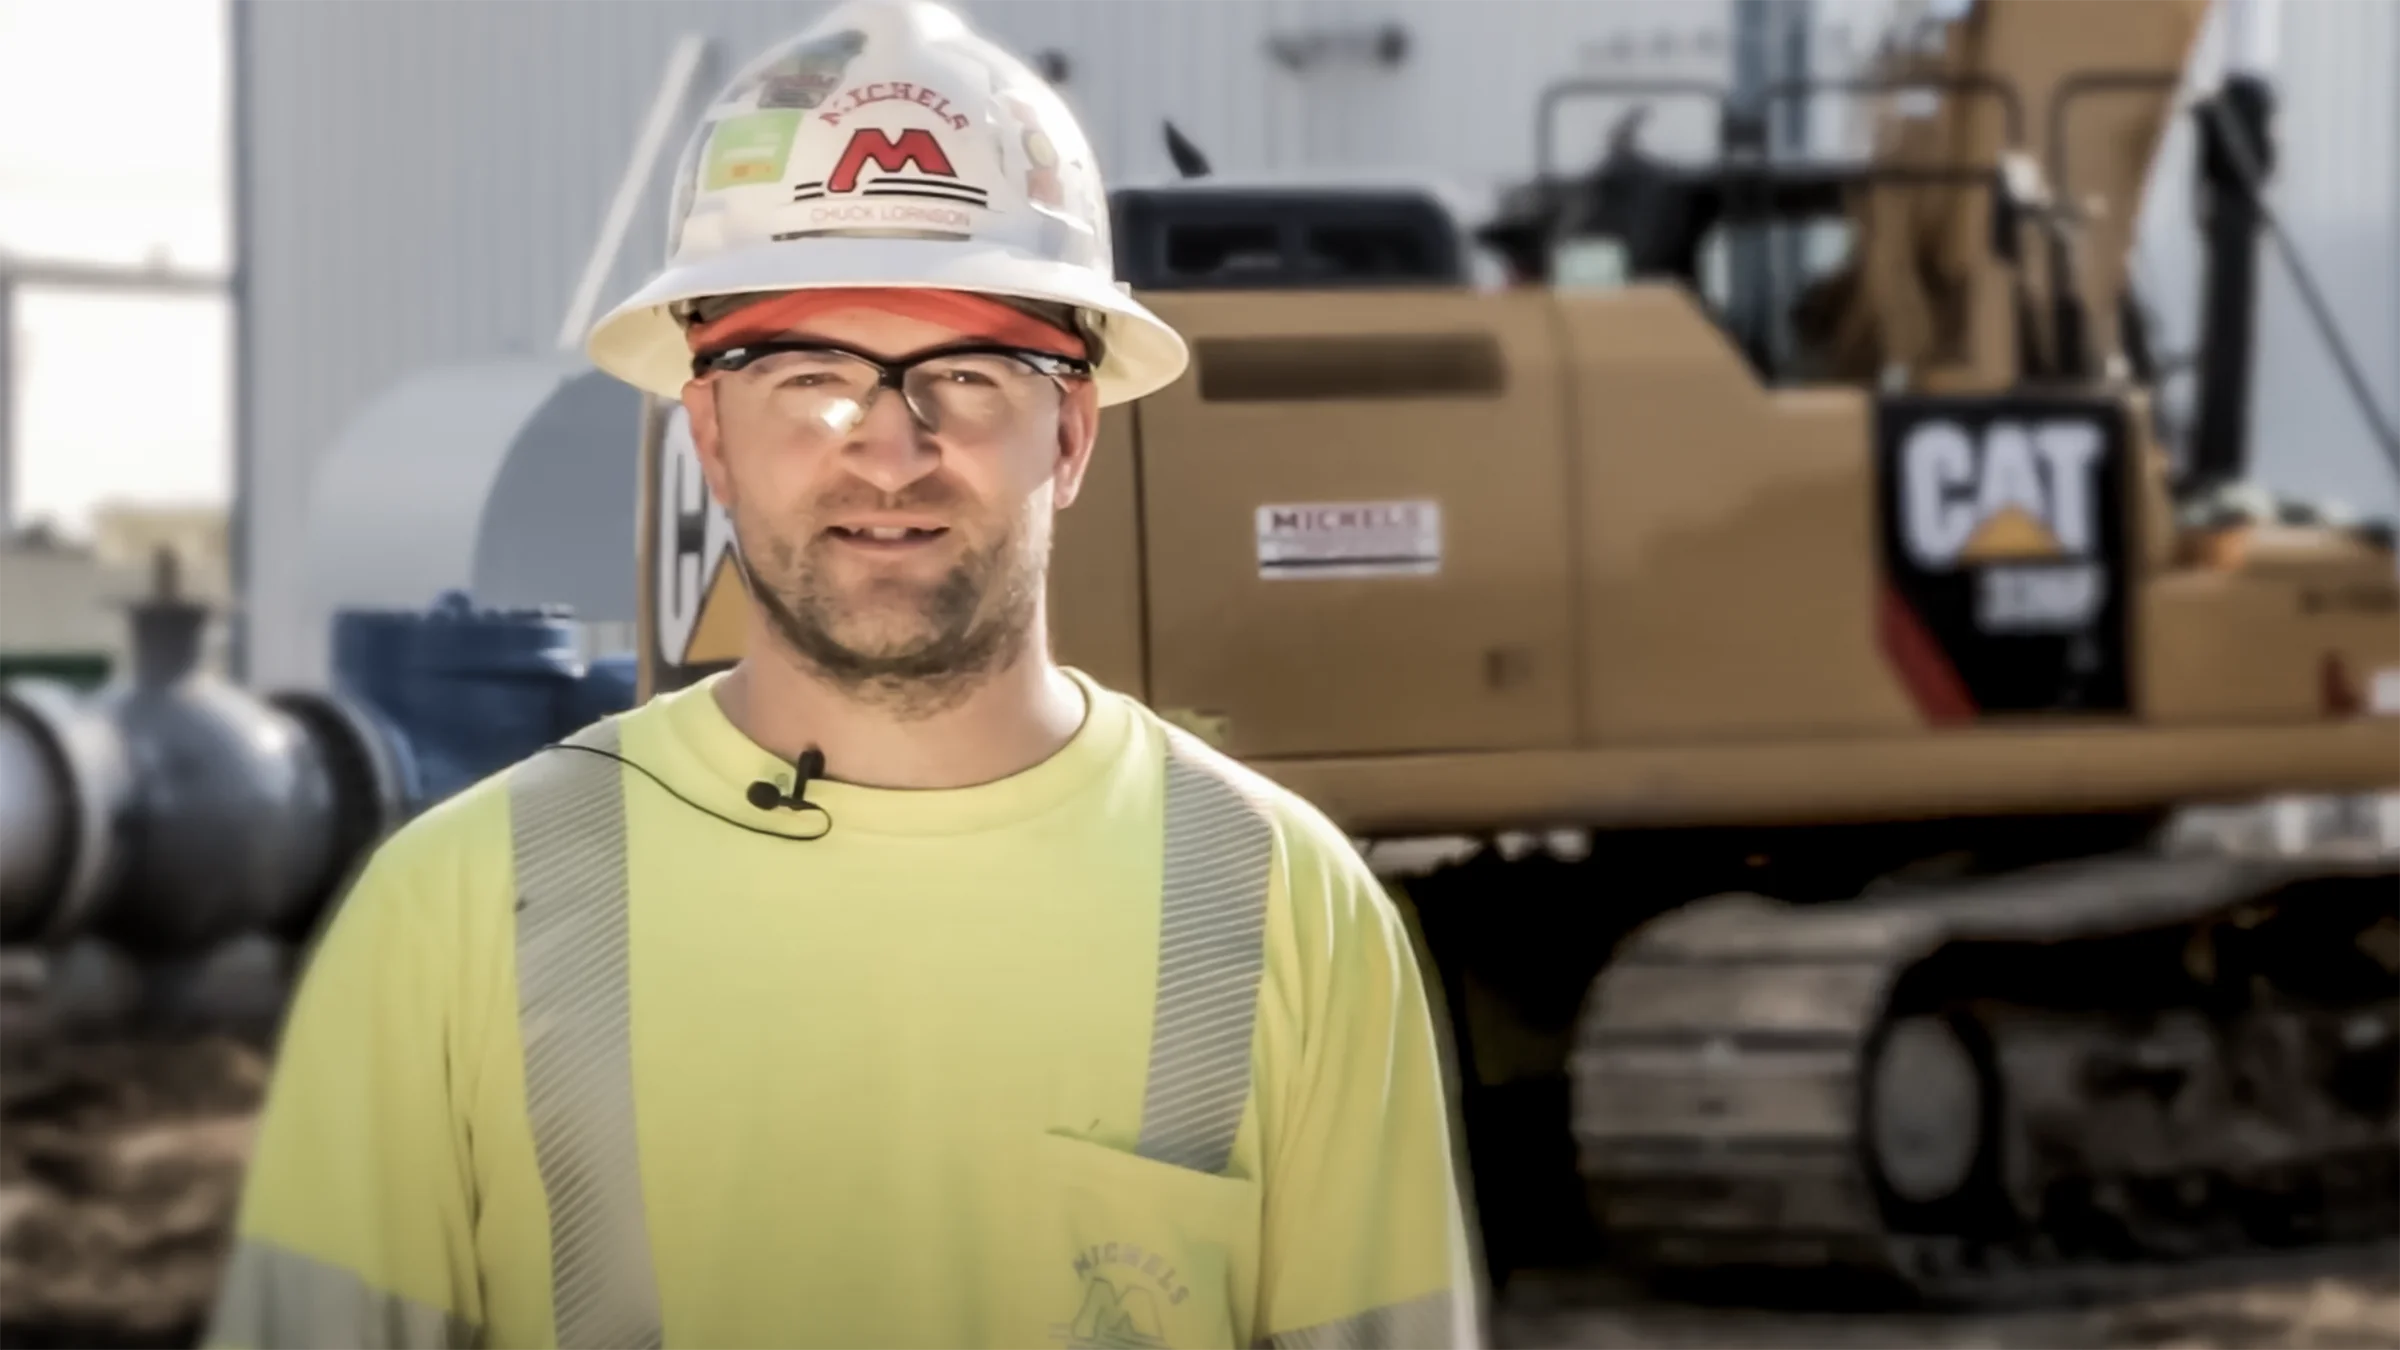 A man wearing safety equipment stands near an excavator